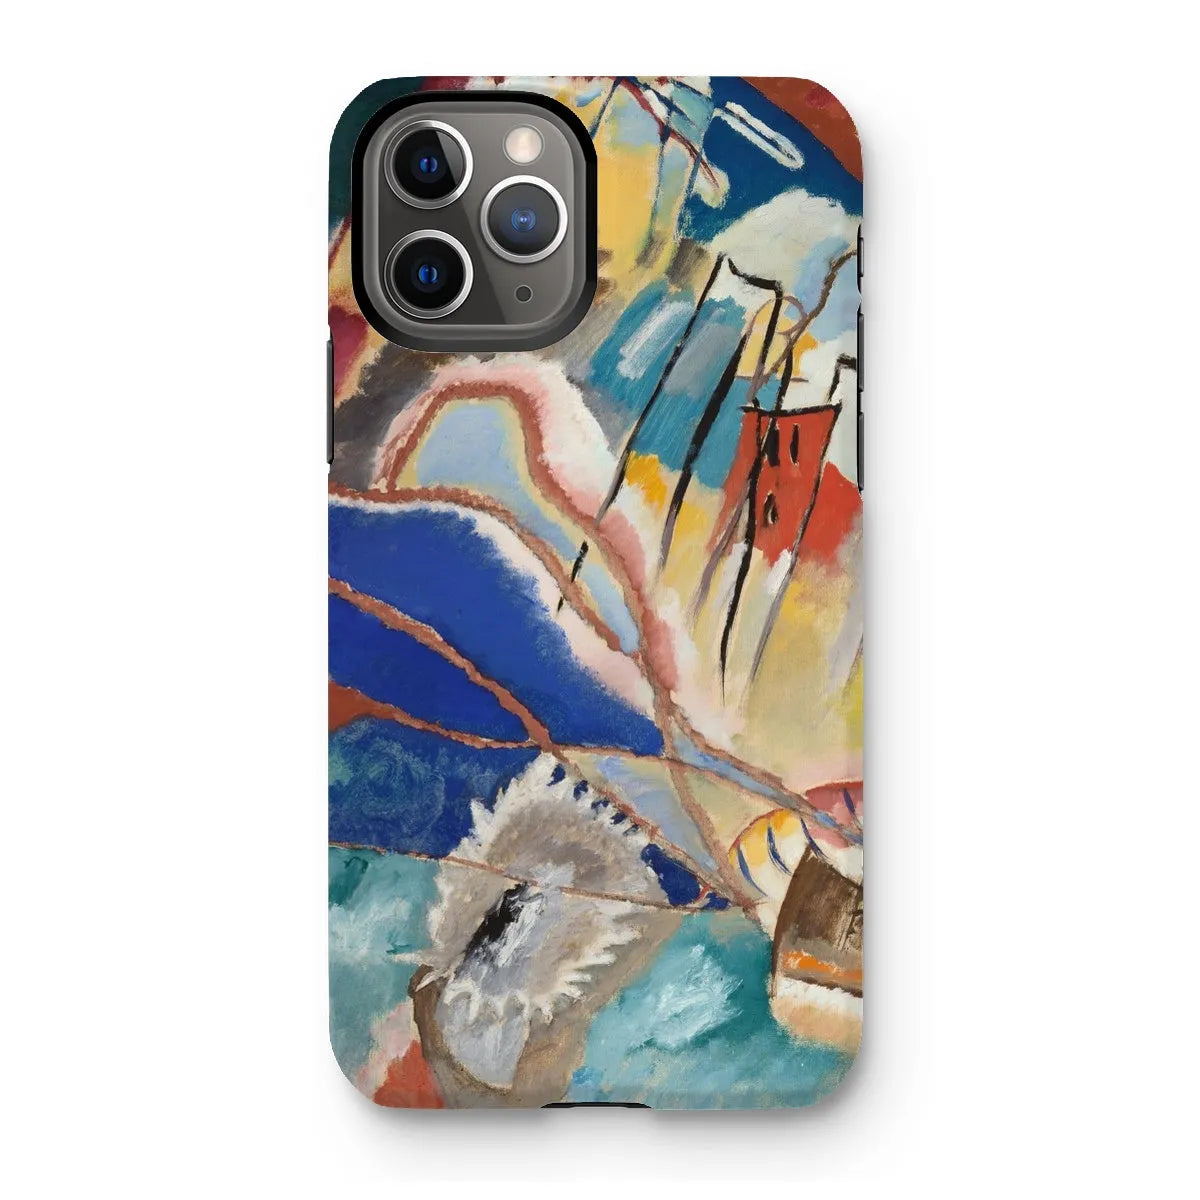 Improvisation No. 30 Art Phone Case - Wassily Kandinsky - Iphone 11 Pro / Matte - Mobile Phone Cases - Aesthetic Art